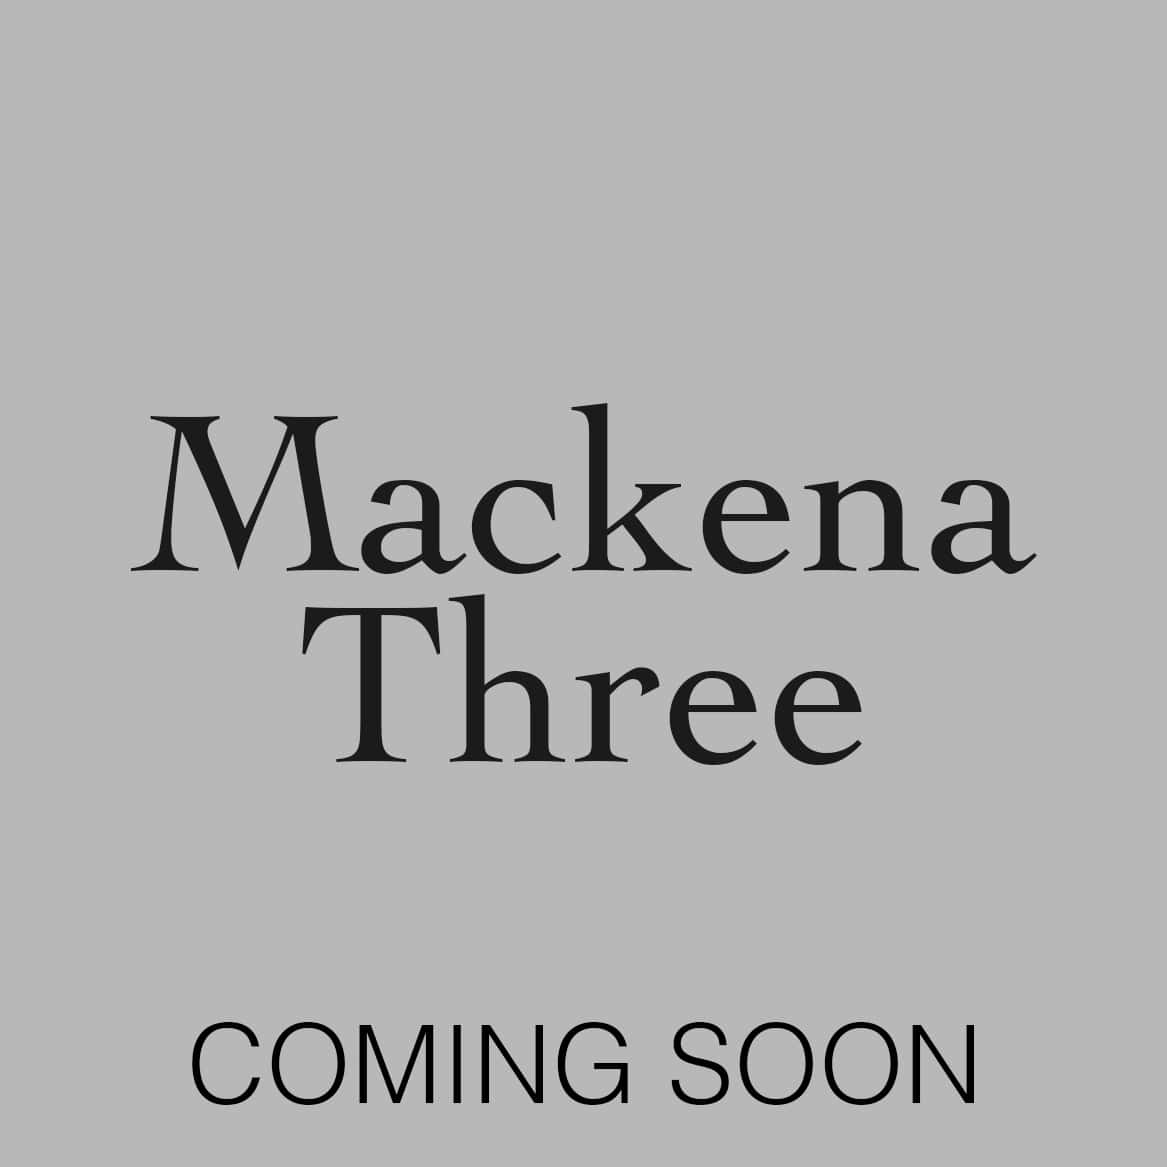 Mackena 3 - Content Cover_Coming Soon-min.jpg